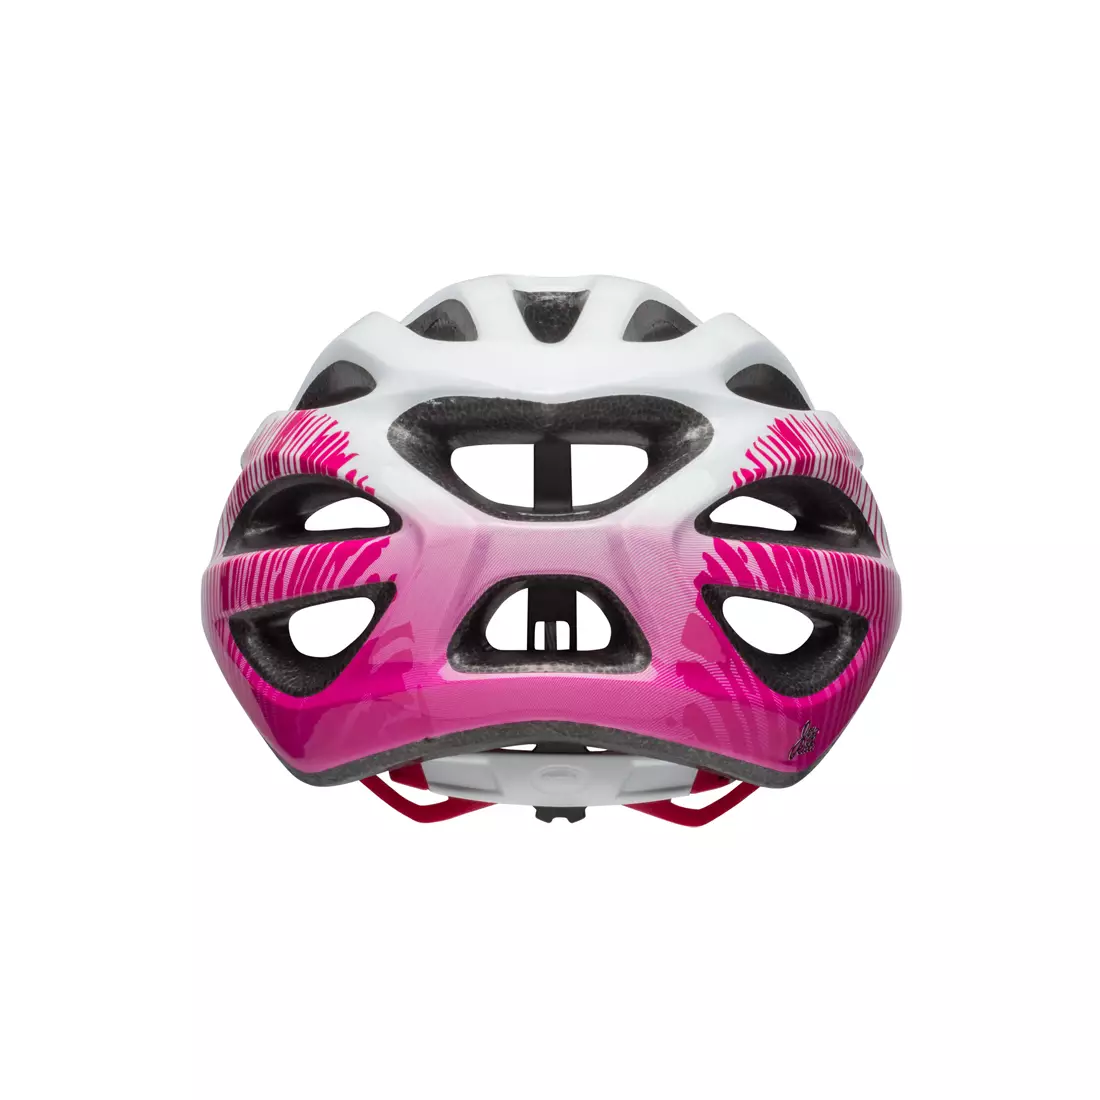 BELL TEMPO JOY RIDE - BEL-7088769 dámská cyklistická helma matná bílá třešeň